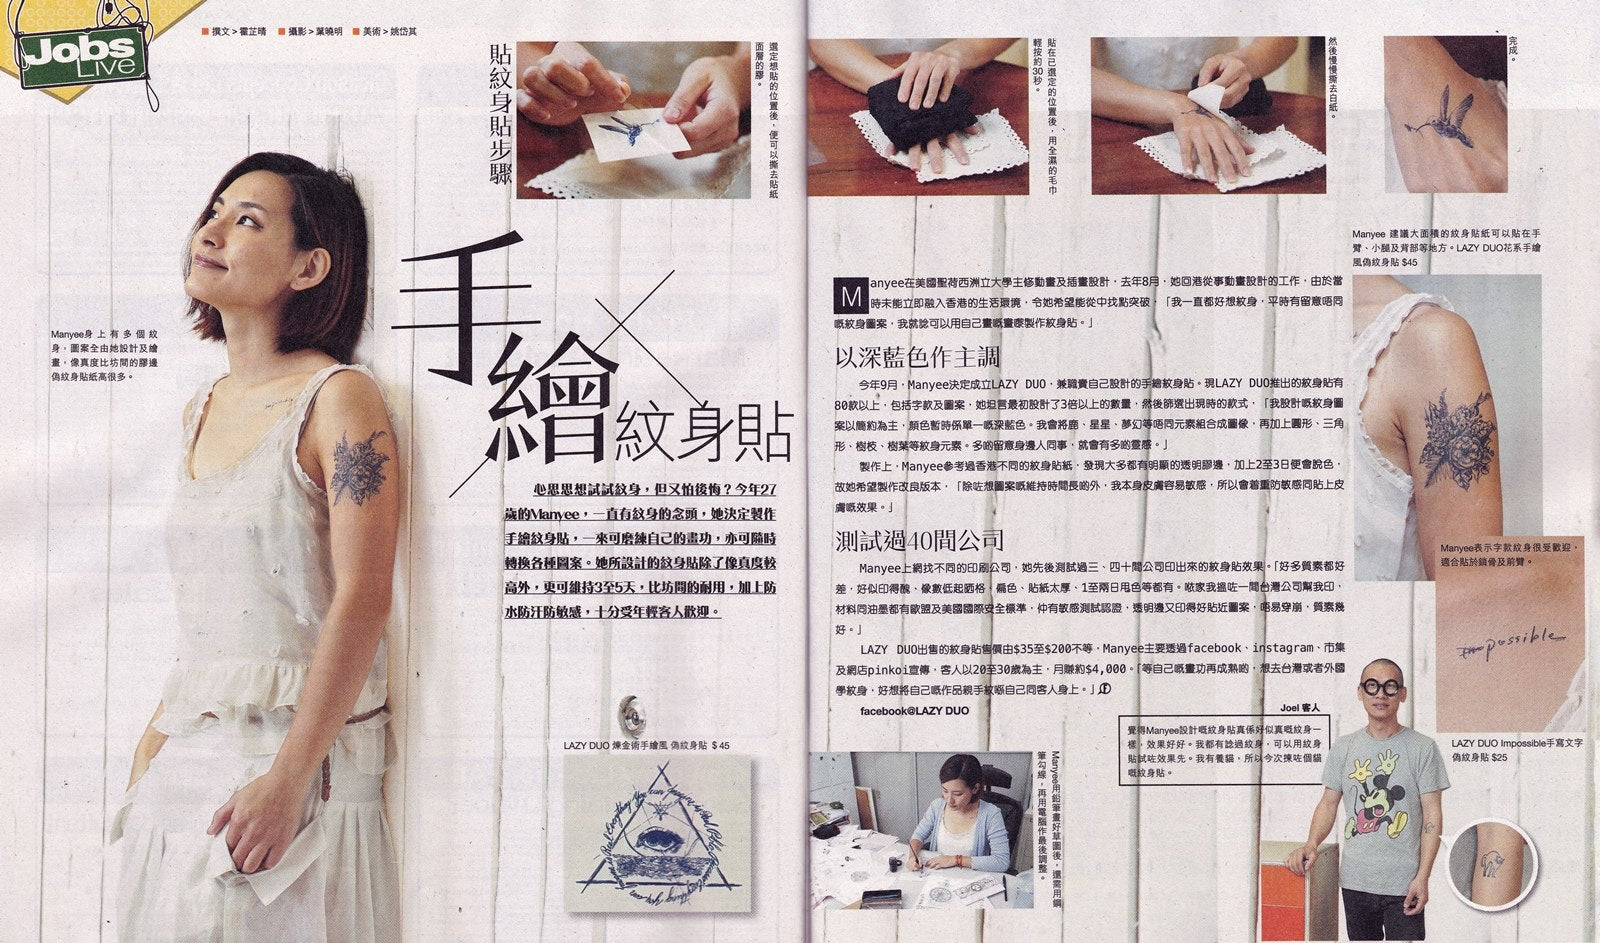 LAZY DUO Temporary Tattoo Manyee Wong Money Hong Kong Fake Sticker Press Interview# FACE 第449期 Trading Express , Jobs Live (p.14)